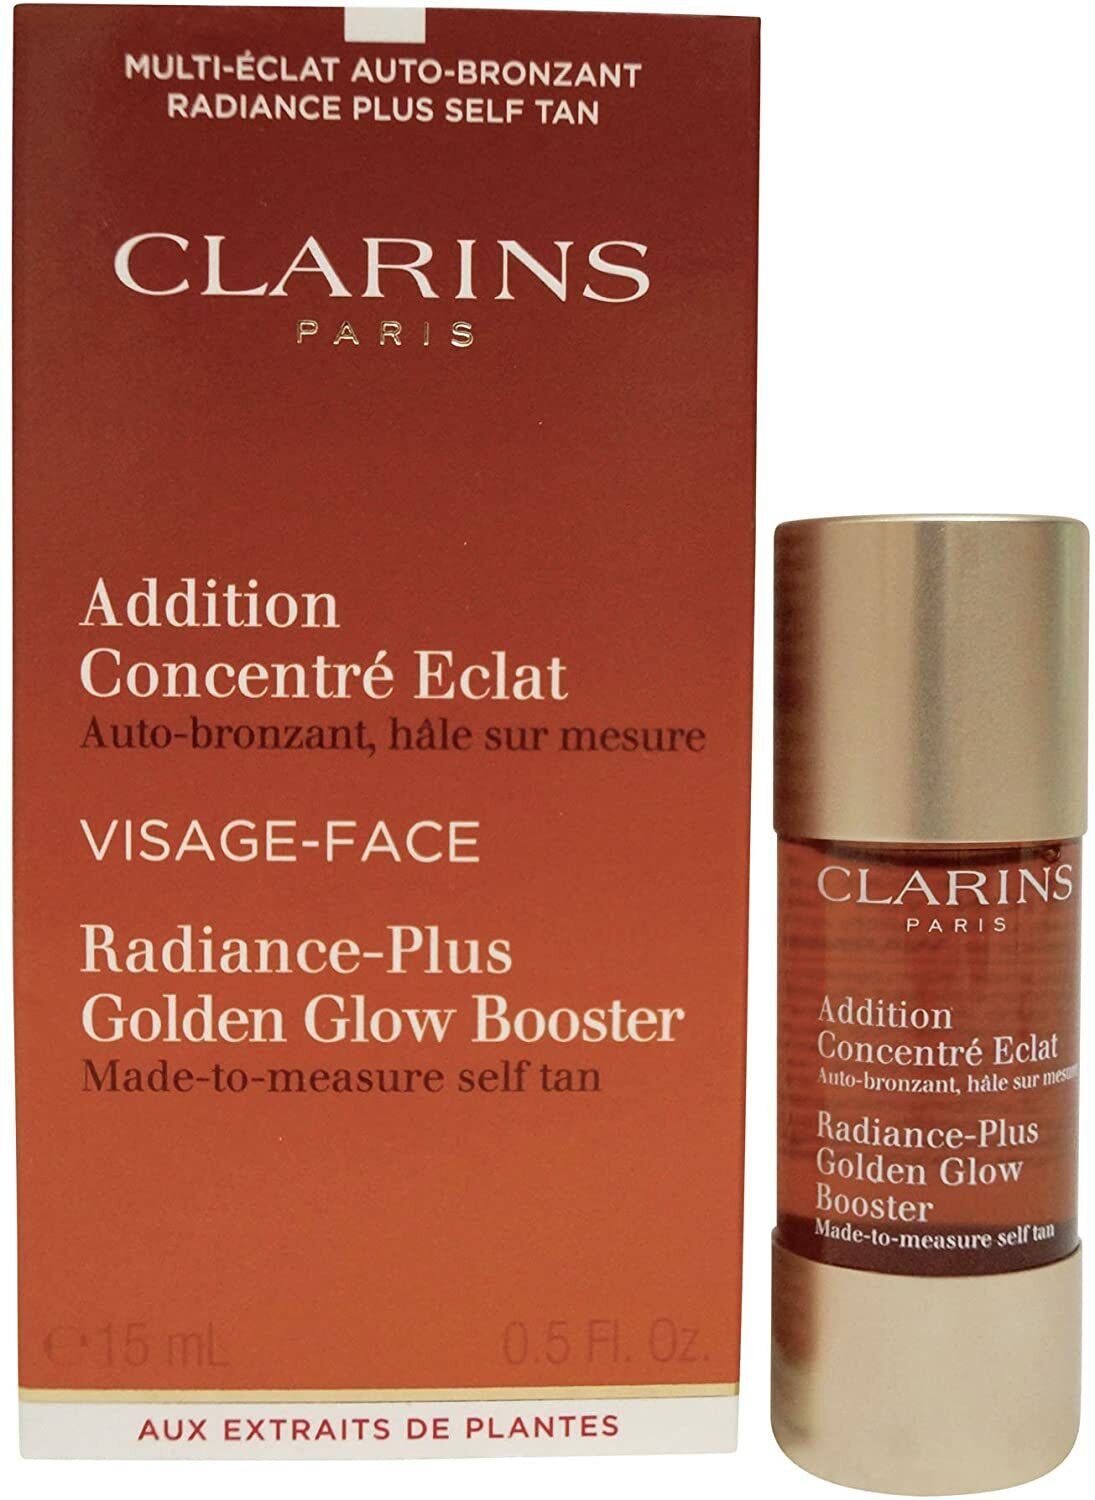 CLARINS Radiance-Plus Golden Glow Booster VISAGE-FACE 15ml Addition Concentré Eclat